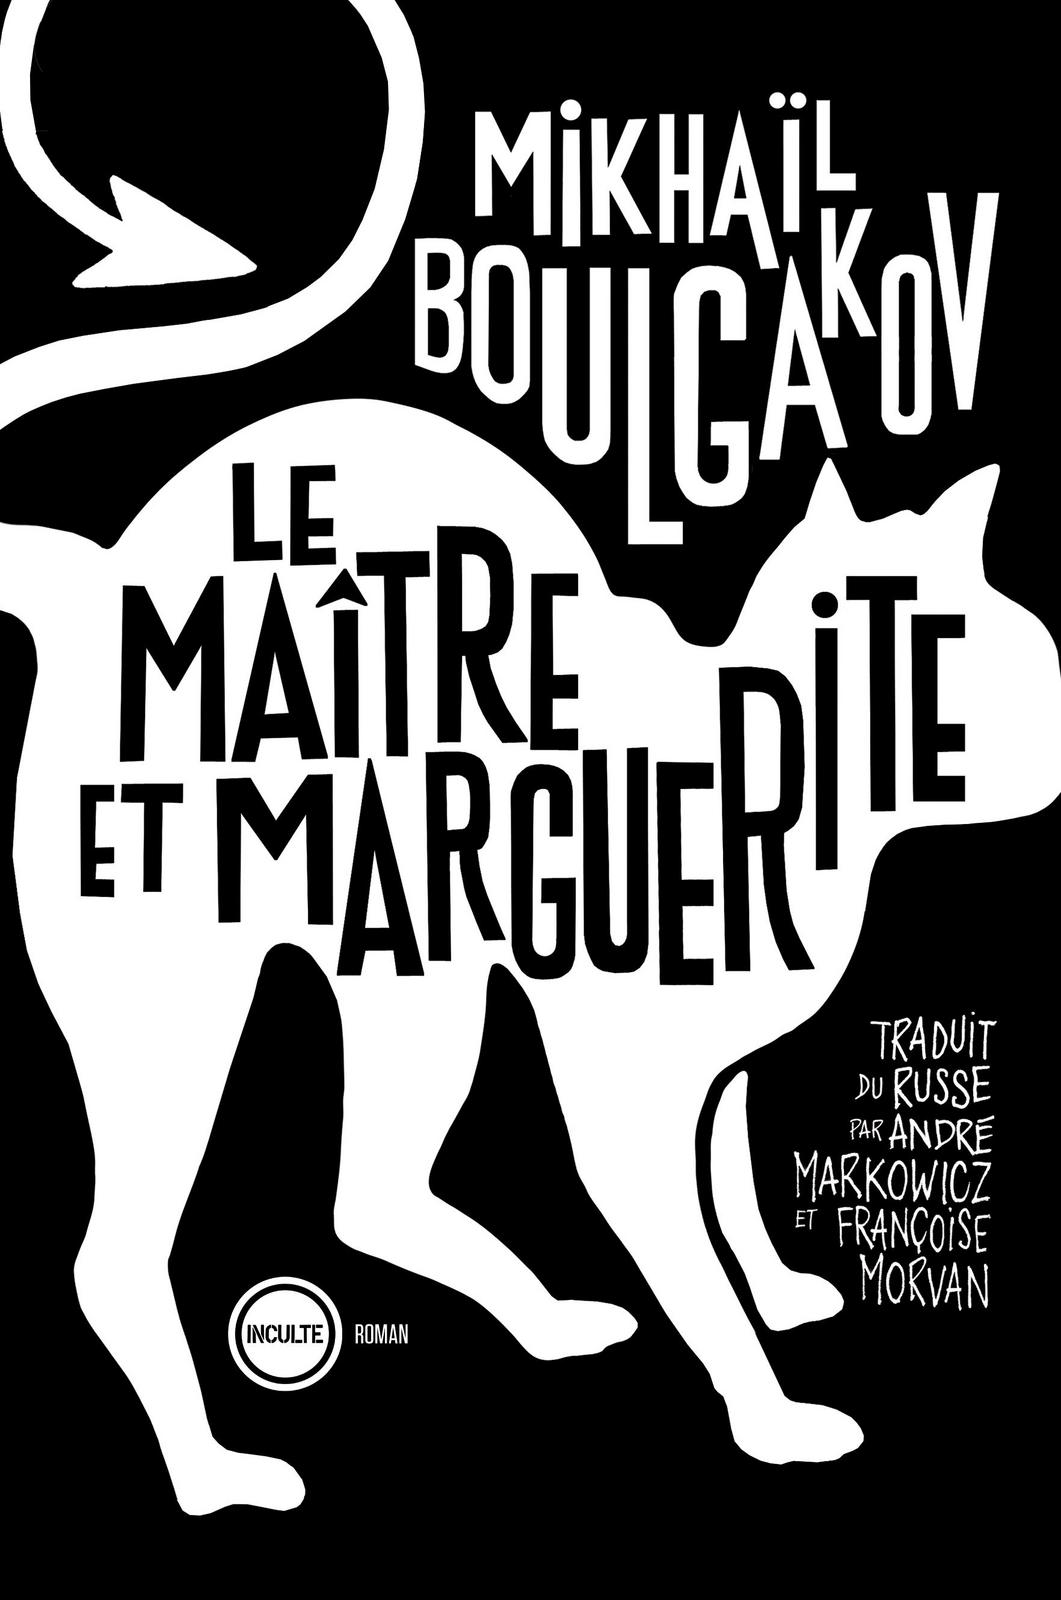 Михаил Афанасьевич Булгаков: Le Maître et Marguerite (French language, 2020)